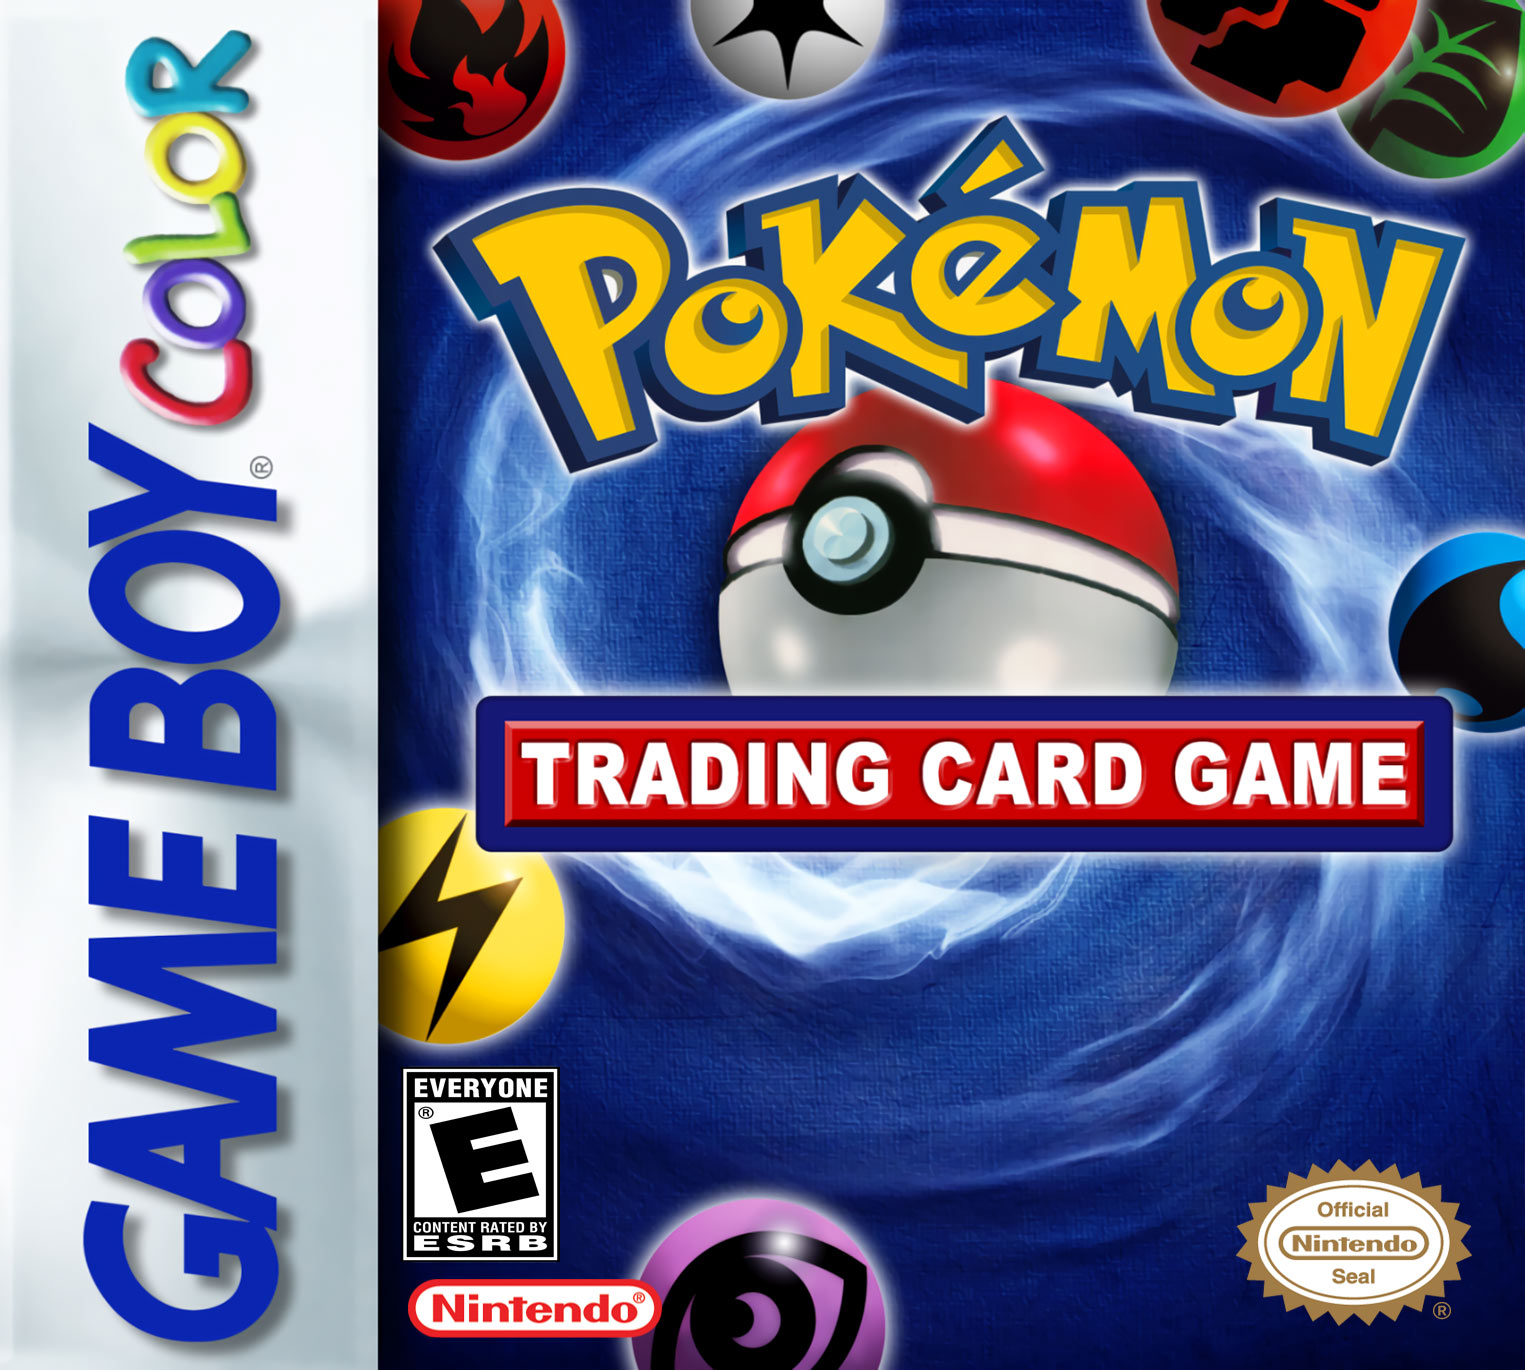 Pokémon Trading Card Game Details - LaunchBox Games Database